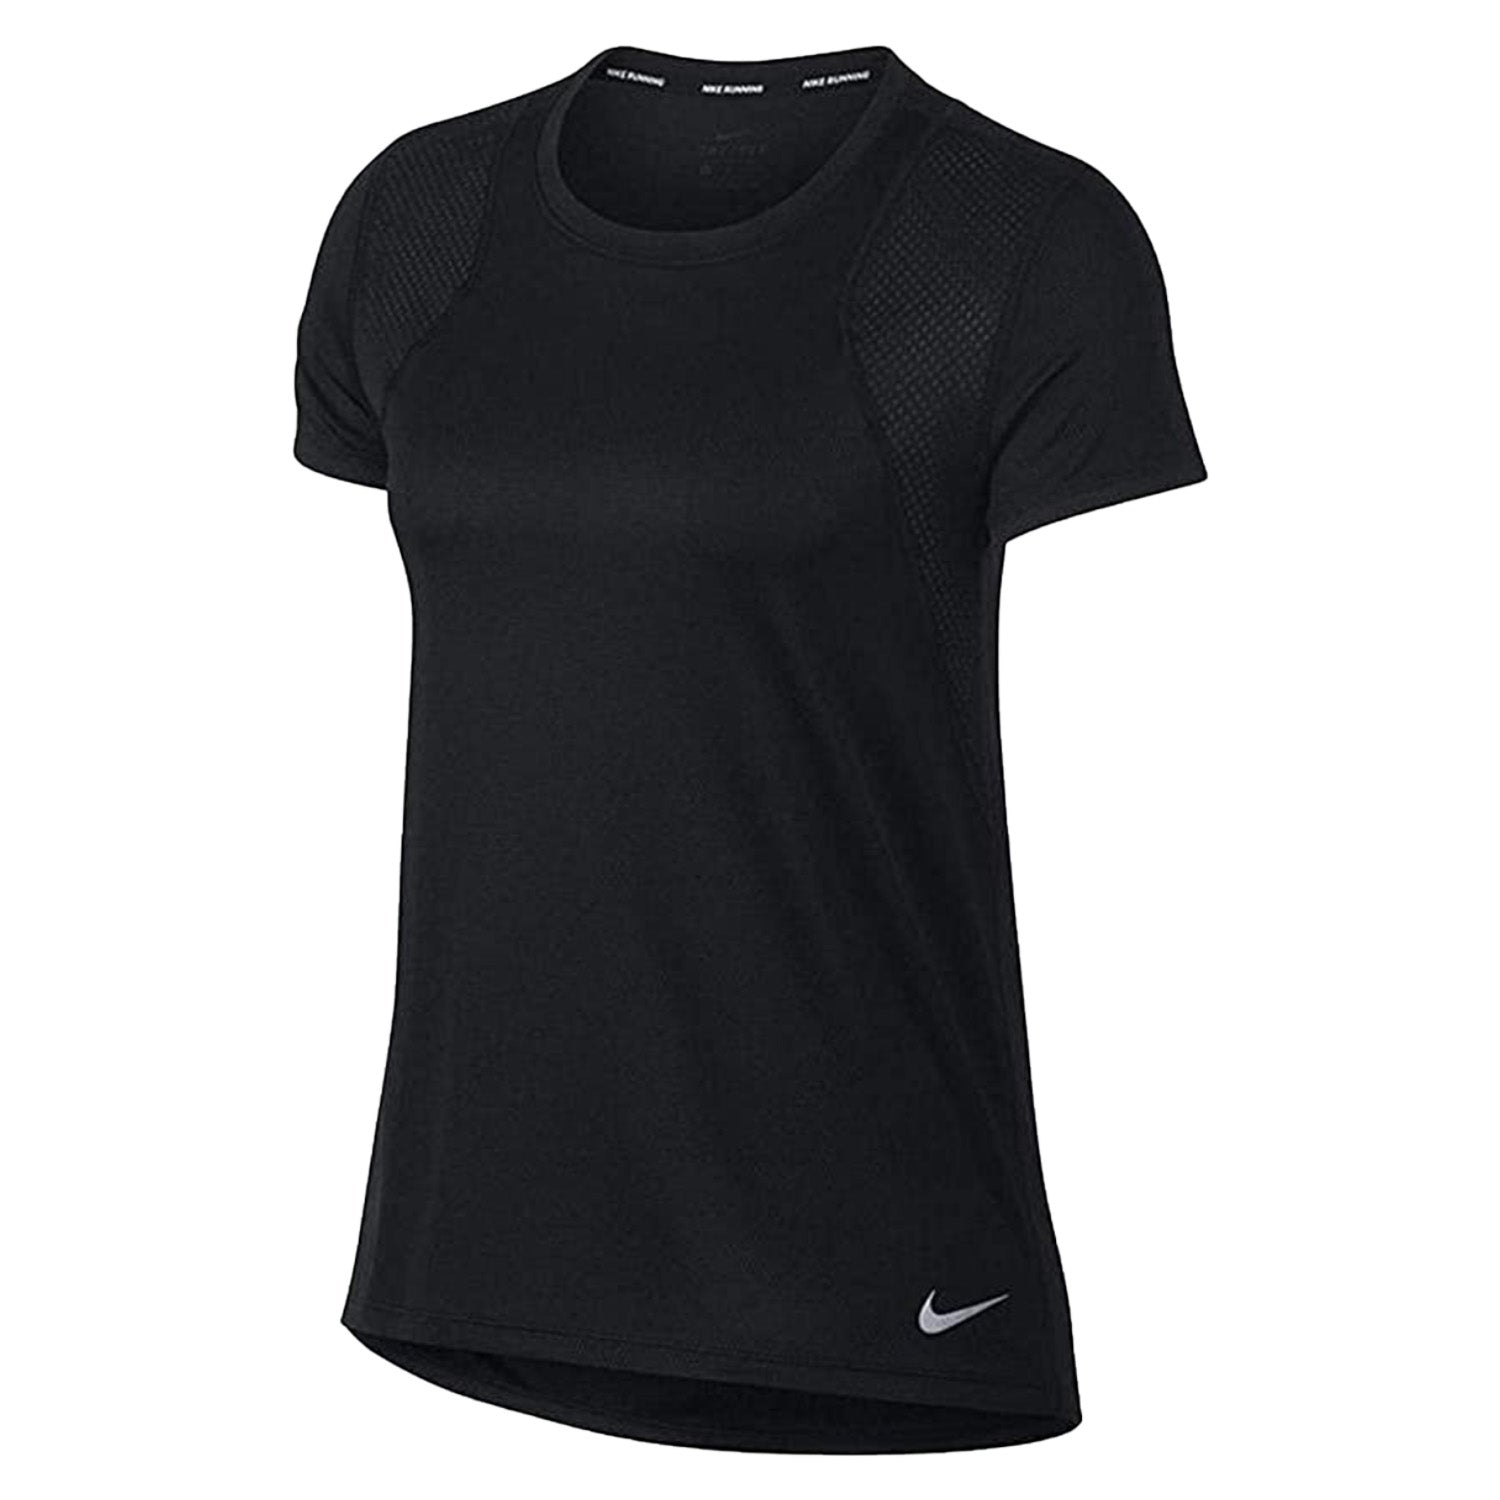 Nike Short-sleeve Running Top Womens Style : 890353